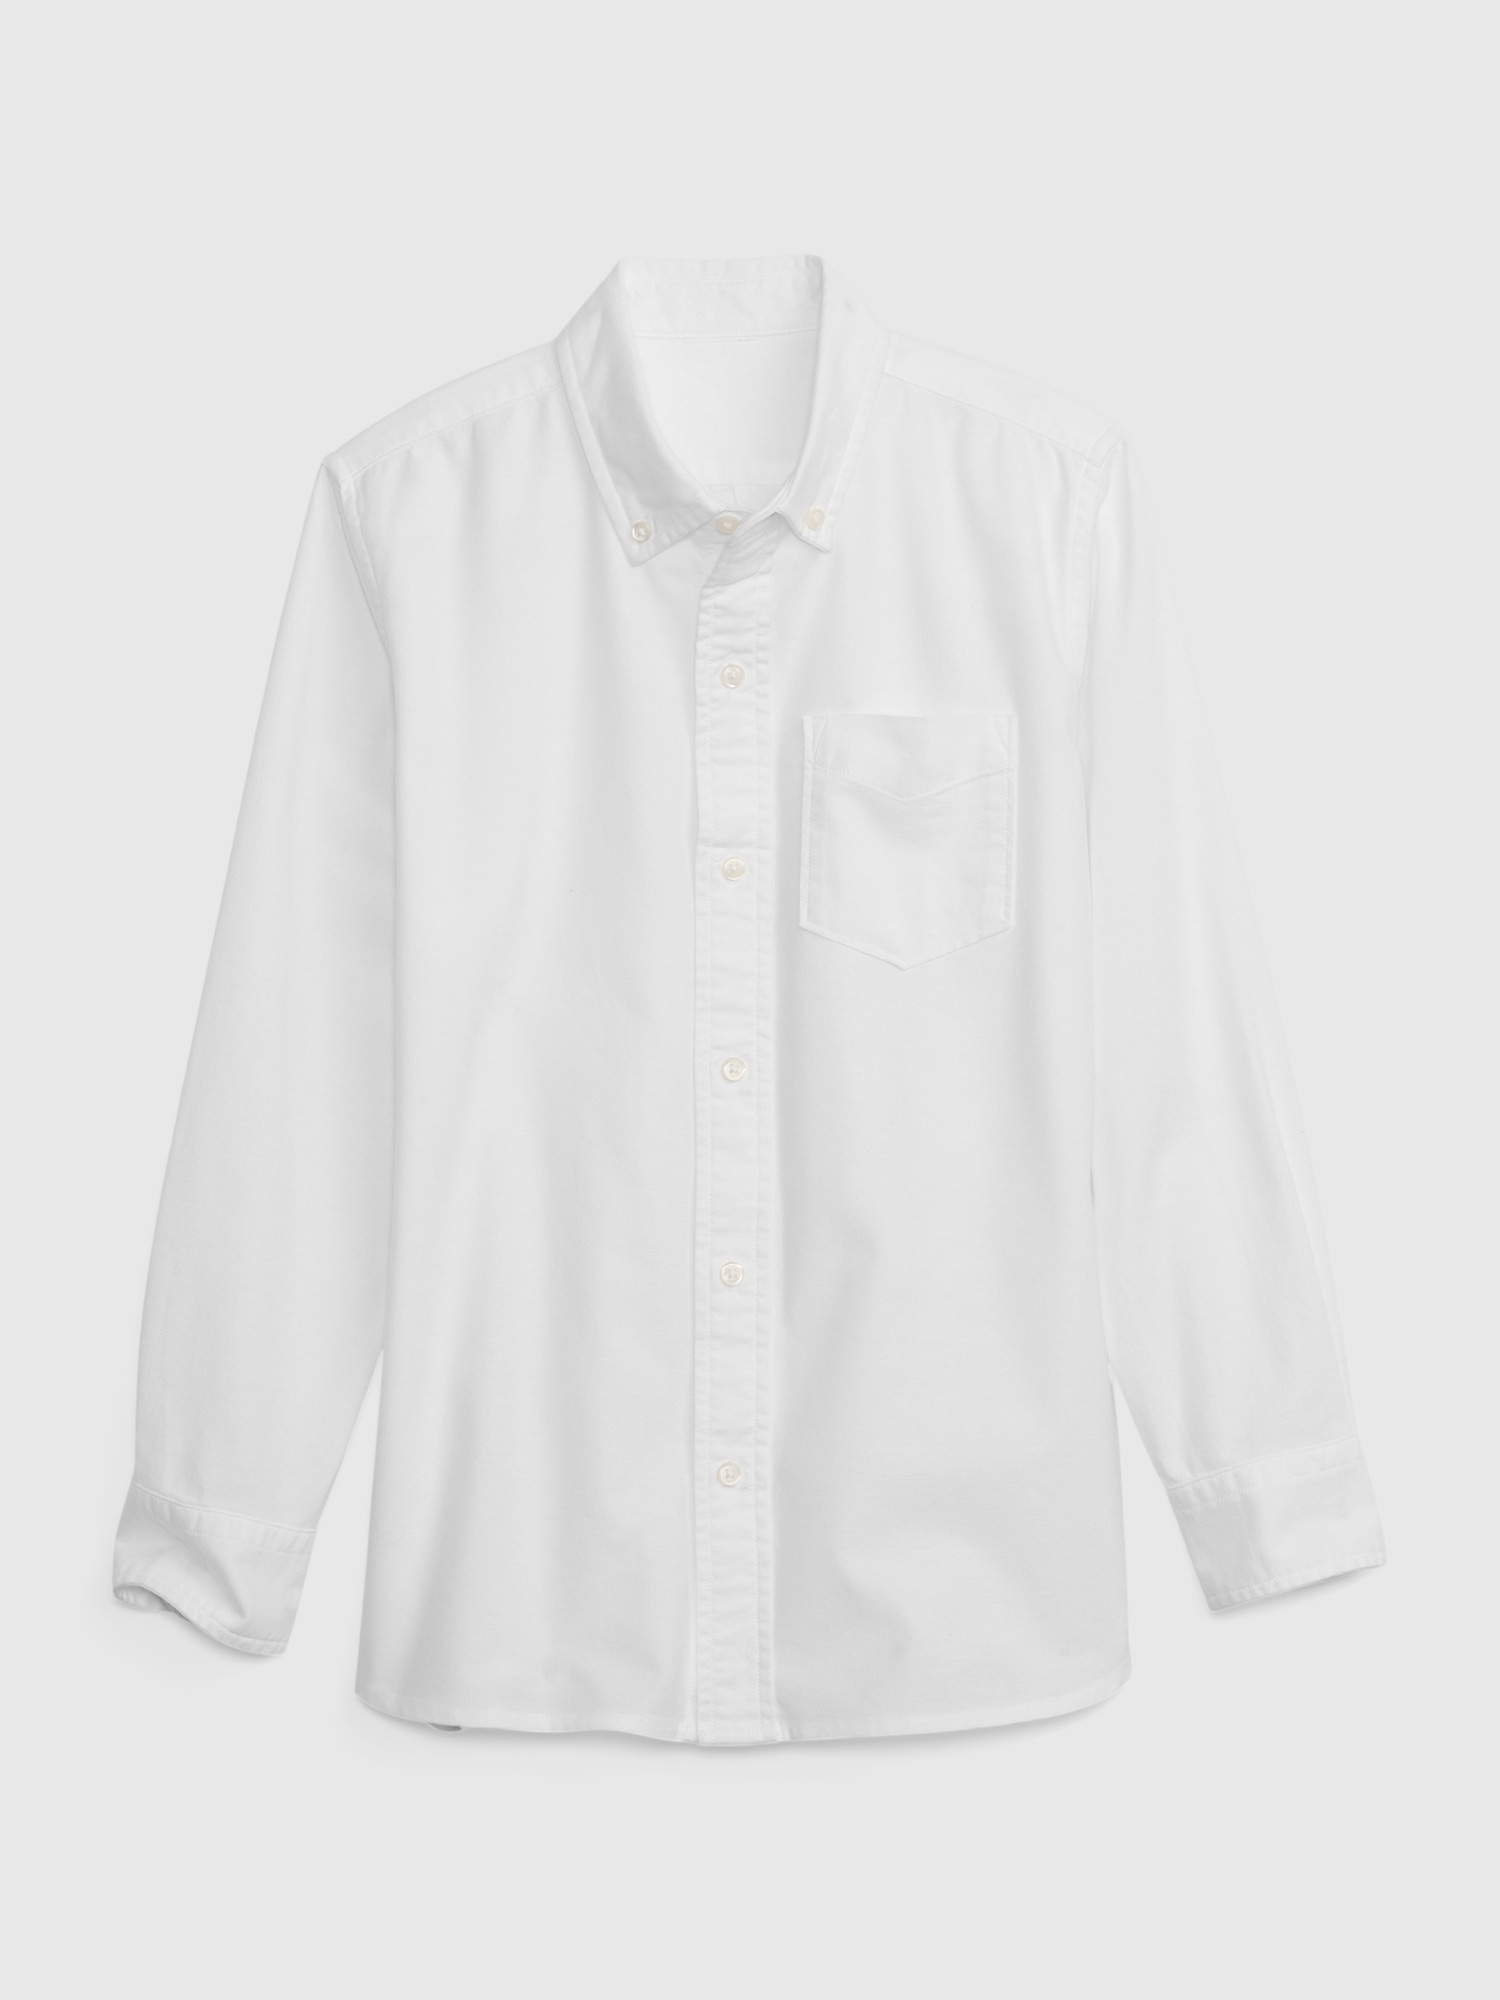 Gap Kids Cotton Uniform Oxford Shirt